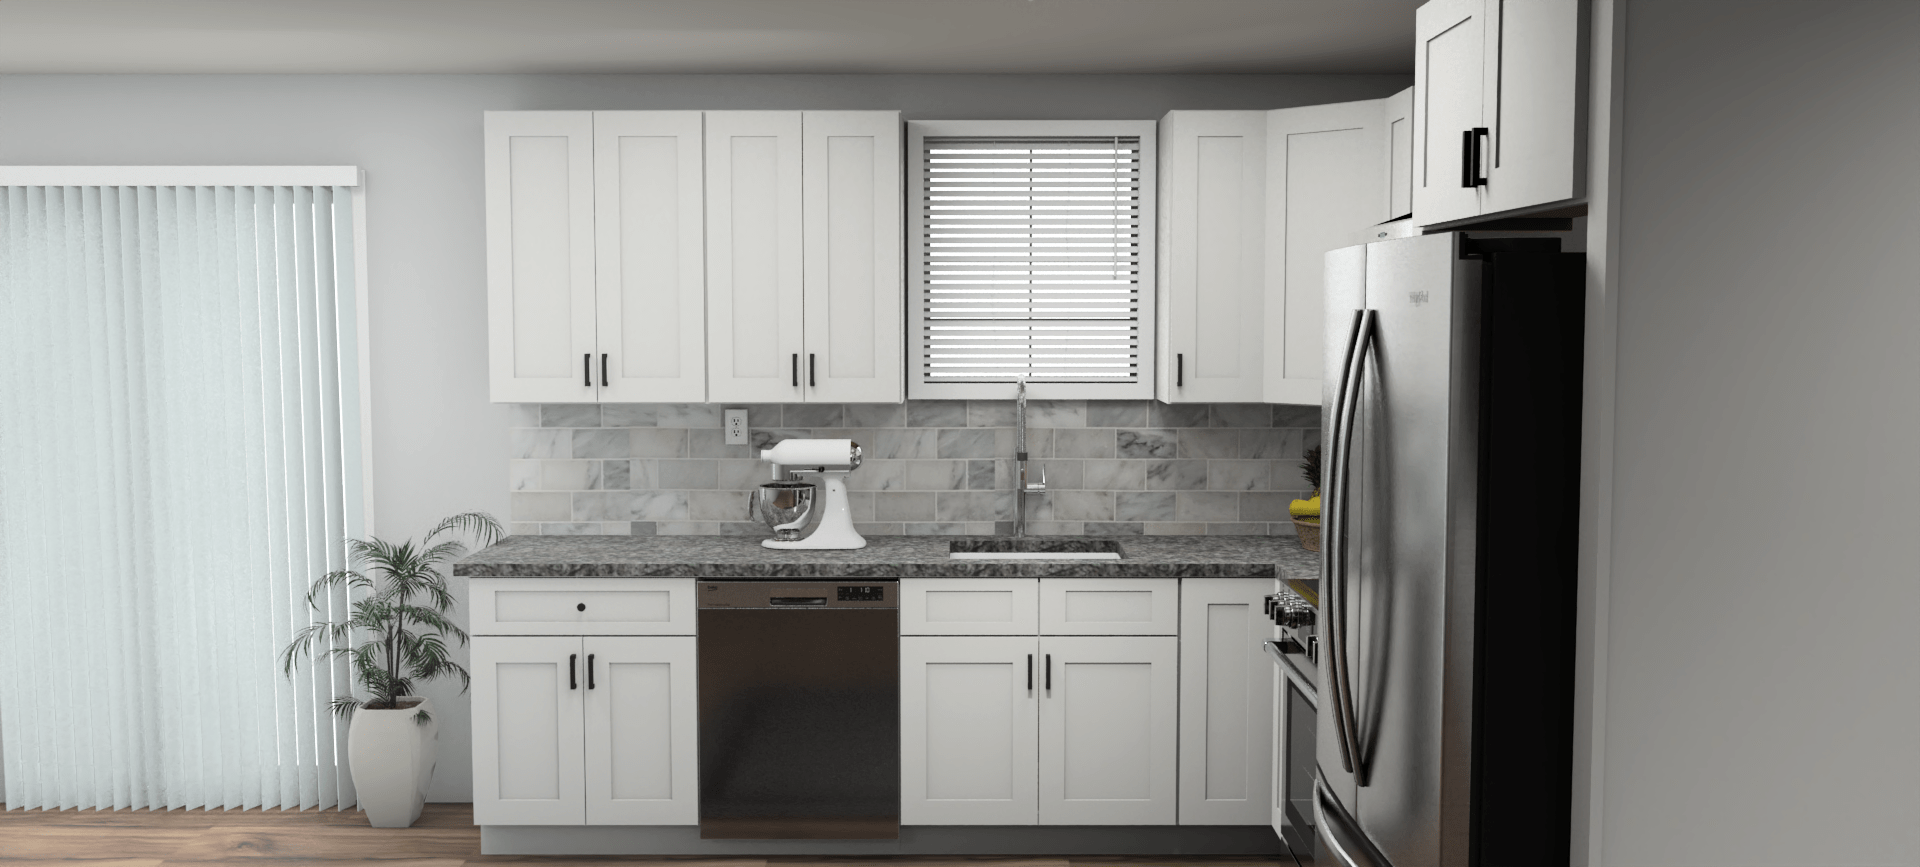 Fabuwood Allure Galaxy Frost 10 x 10 L Shaped Kitchen Side Layout Photo